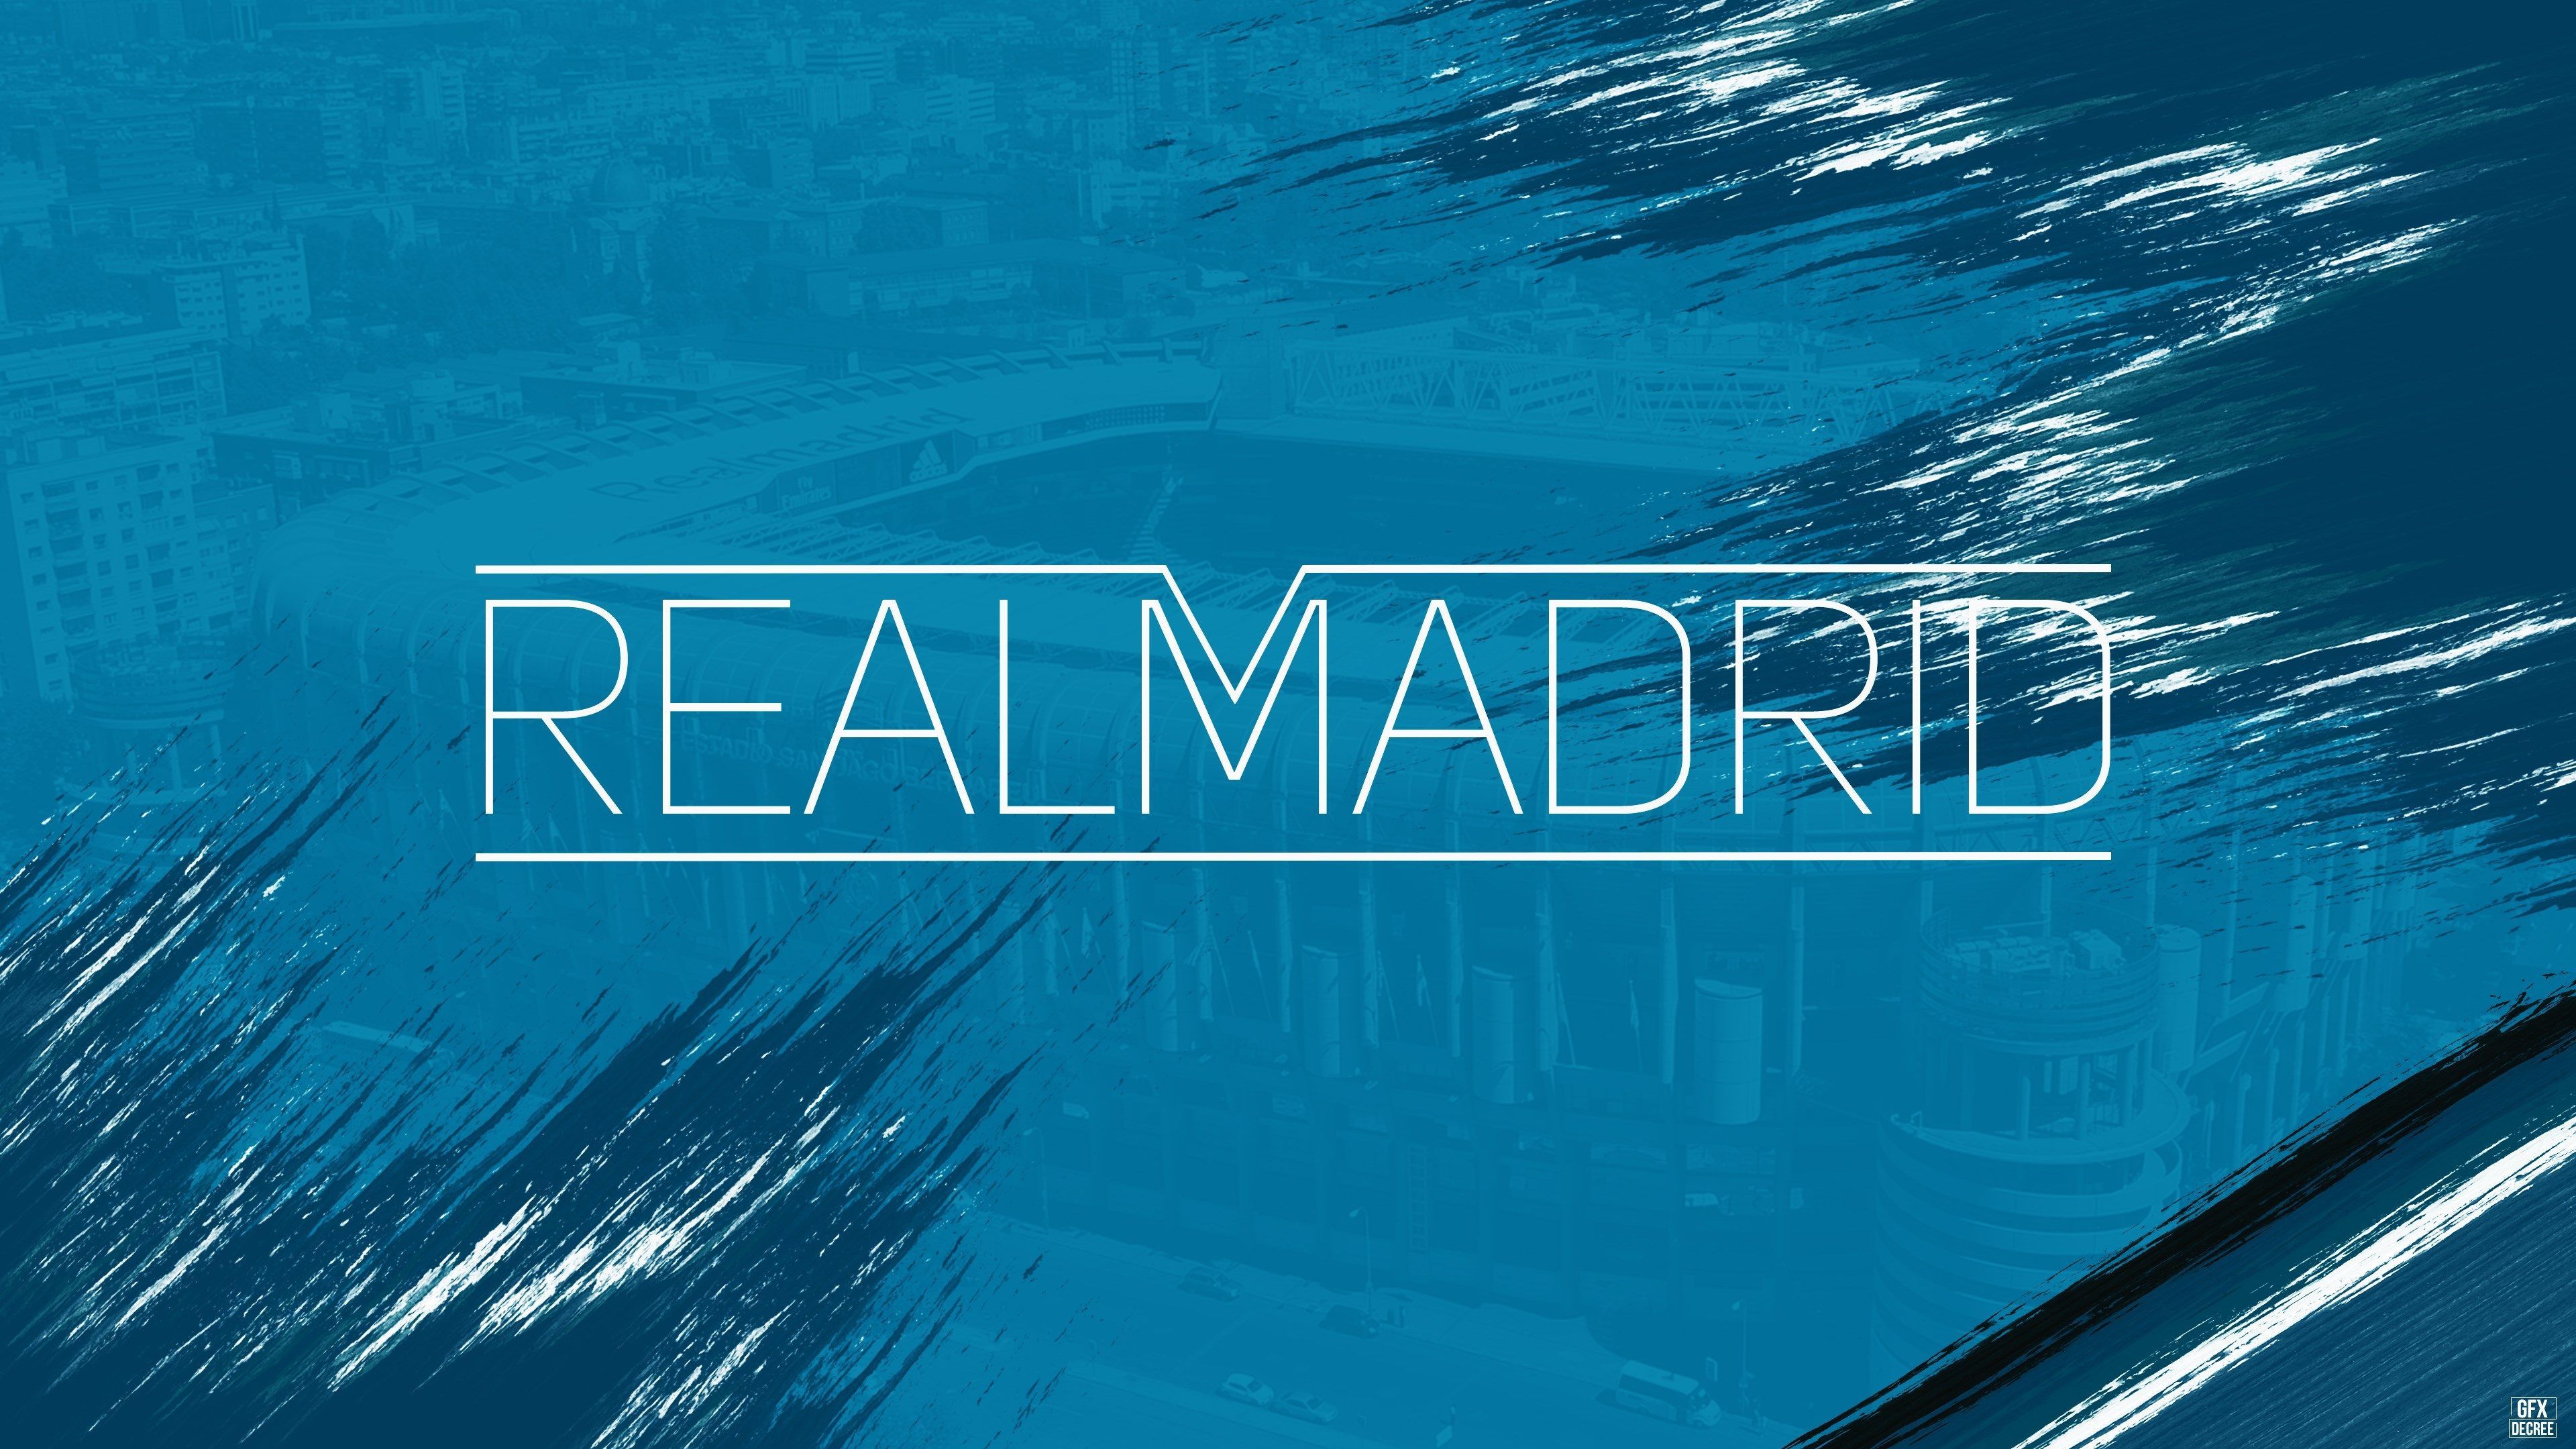 Real Madrid 4k Wallpapers On Wallpaperdog